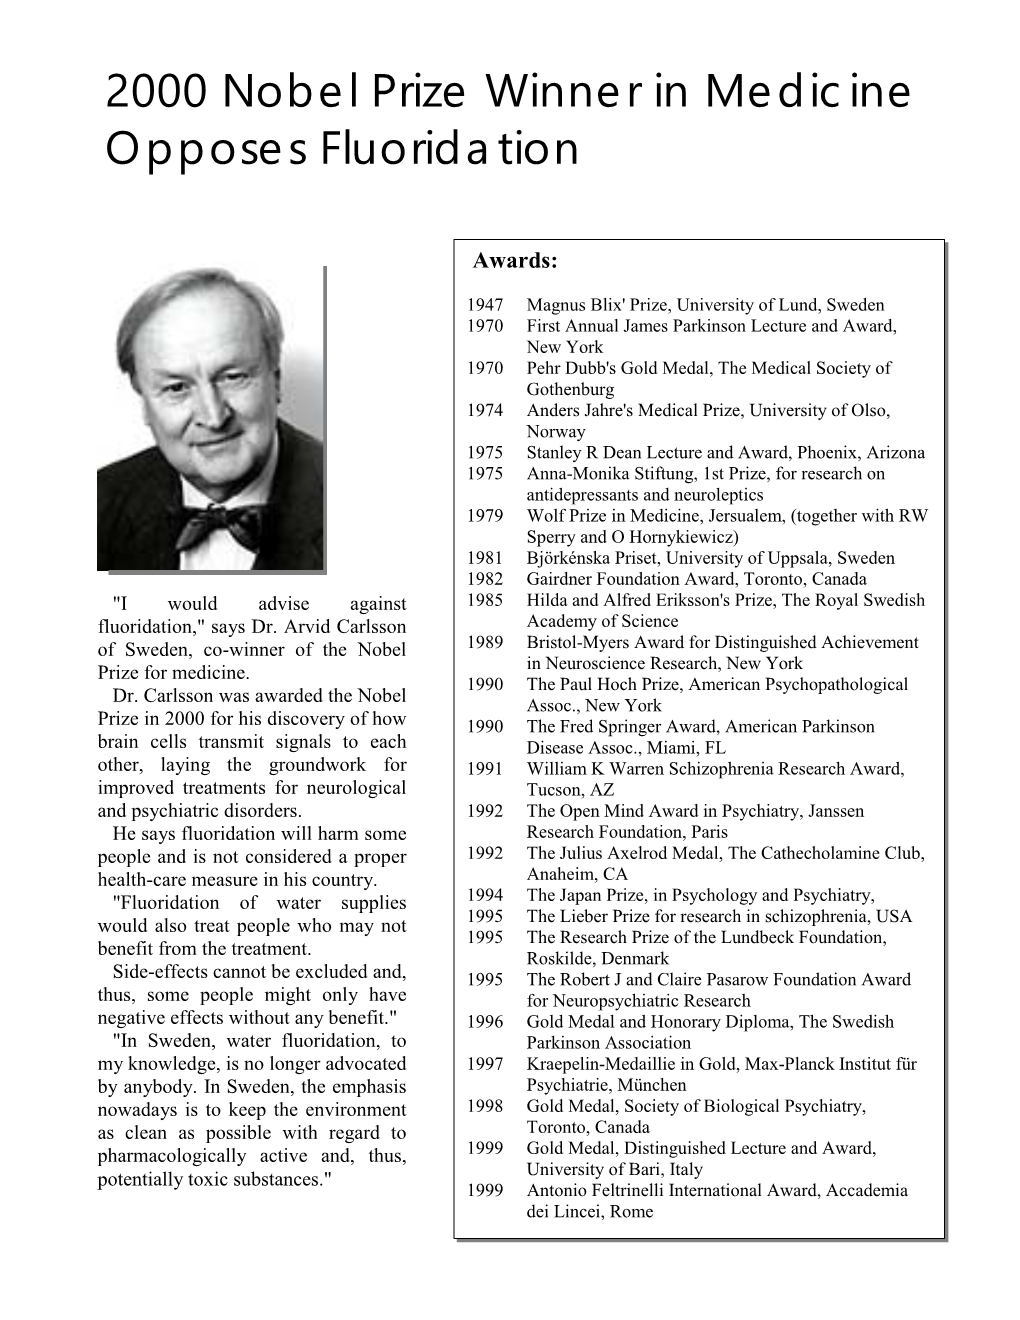 2000 Nobel Prize Winner in Medicine Opposes Fluoridation